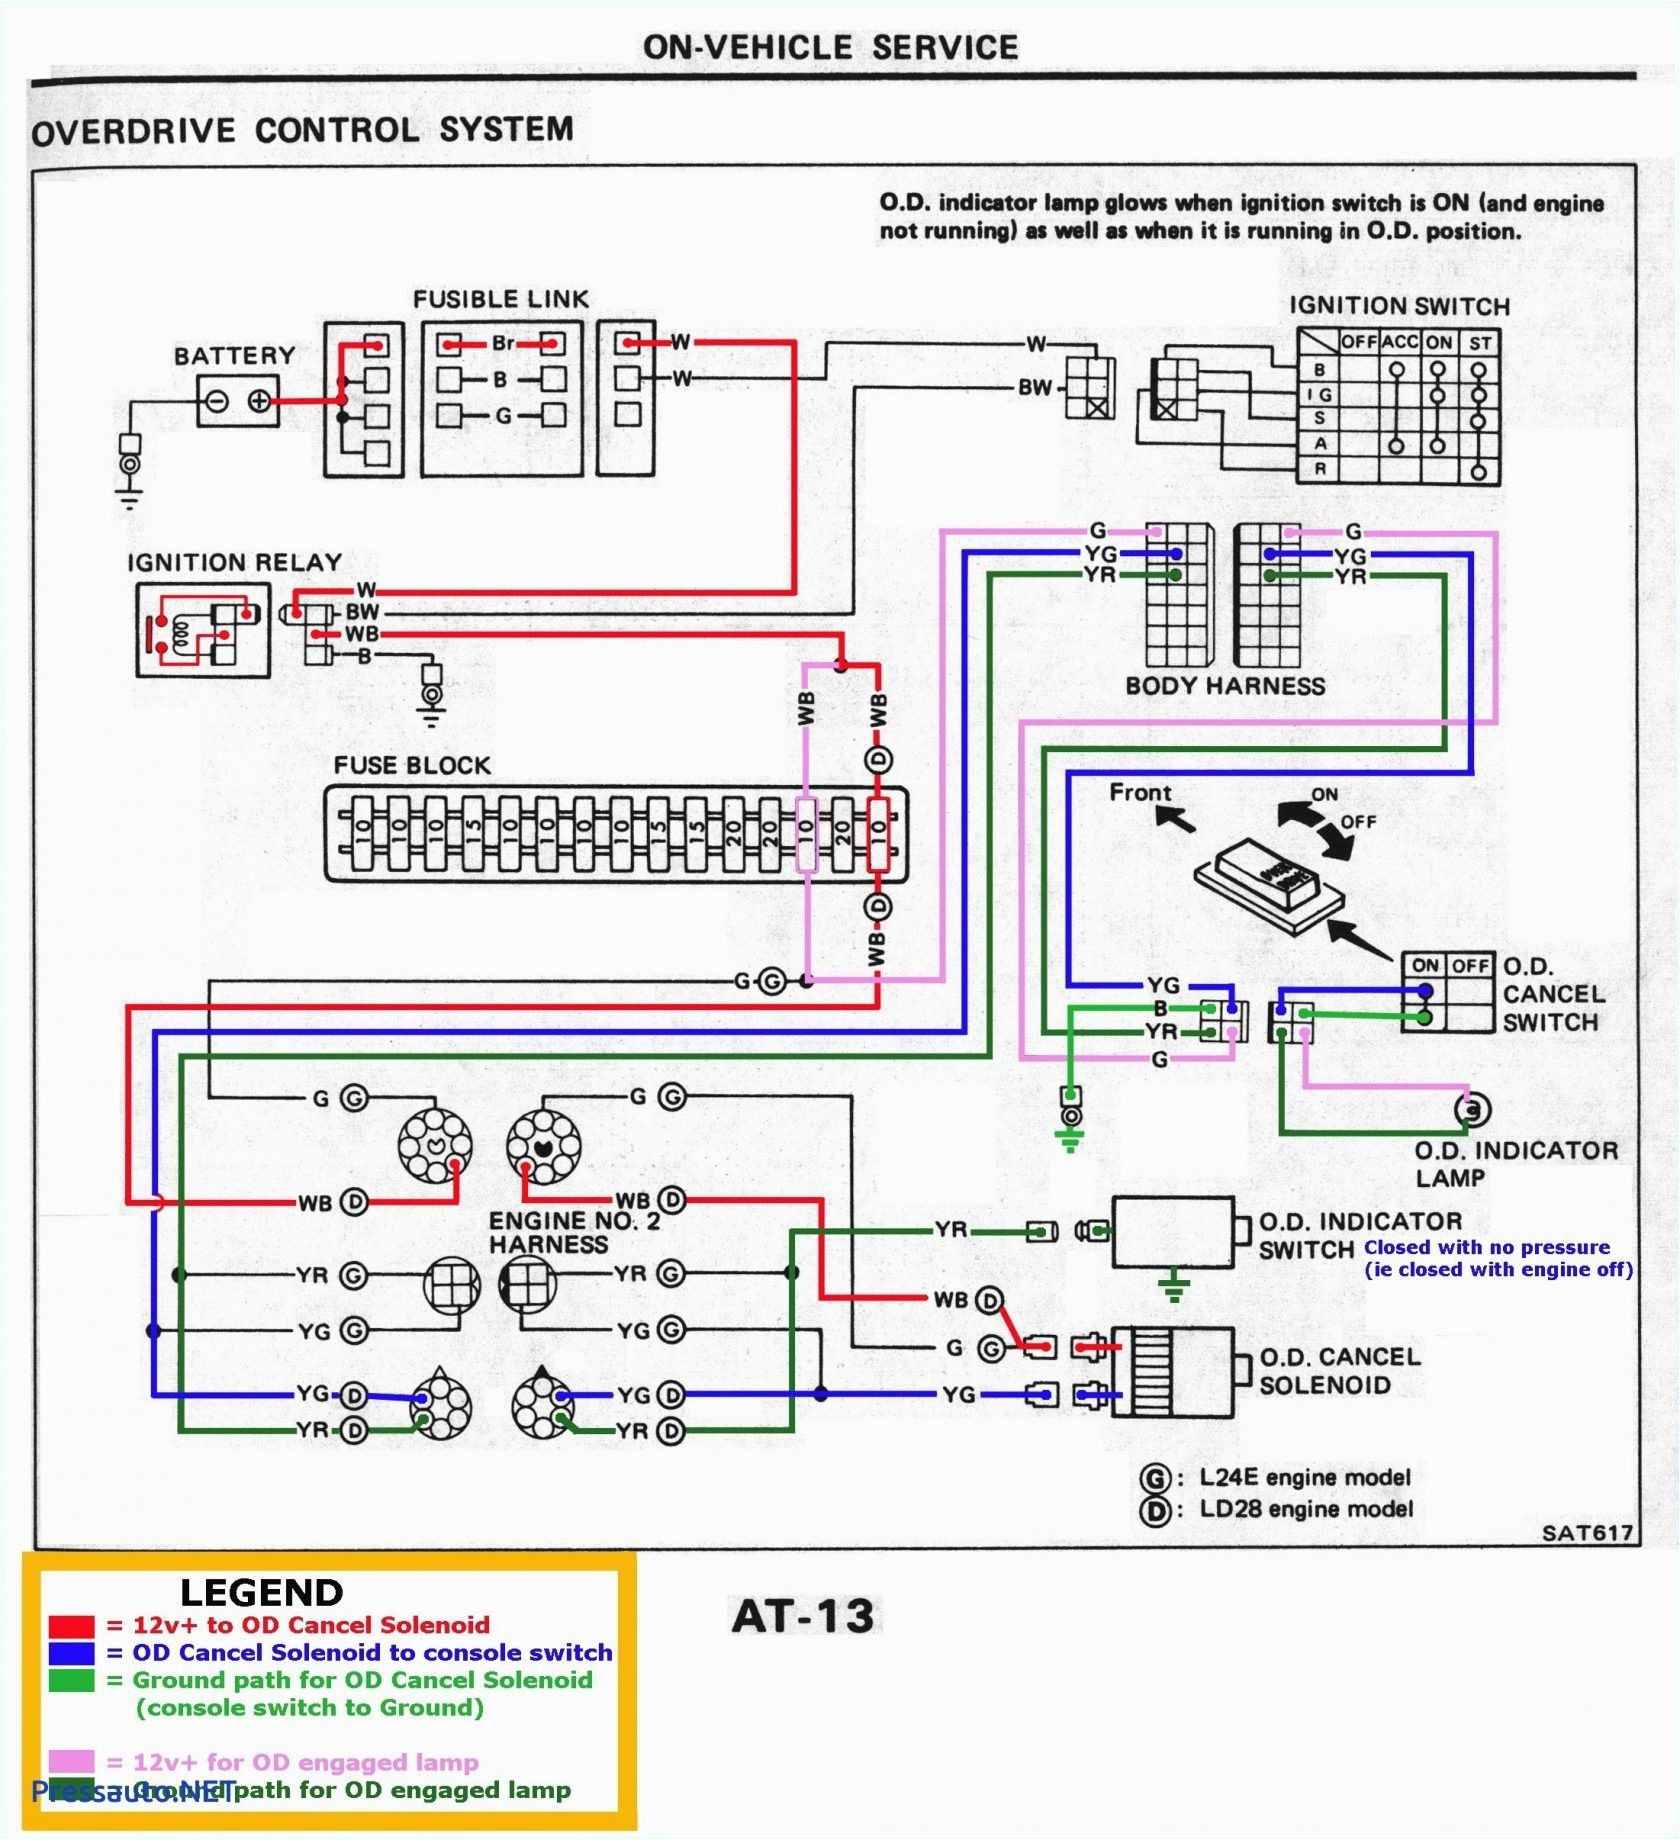 alumacraft wiring diagram wiring diagram used alumacraft wiring harness alumacraft wiring diagram tach manual e book